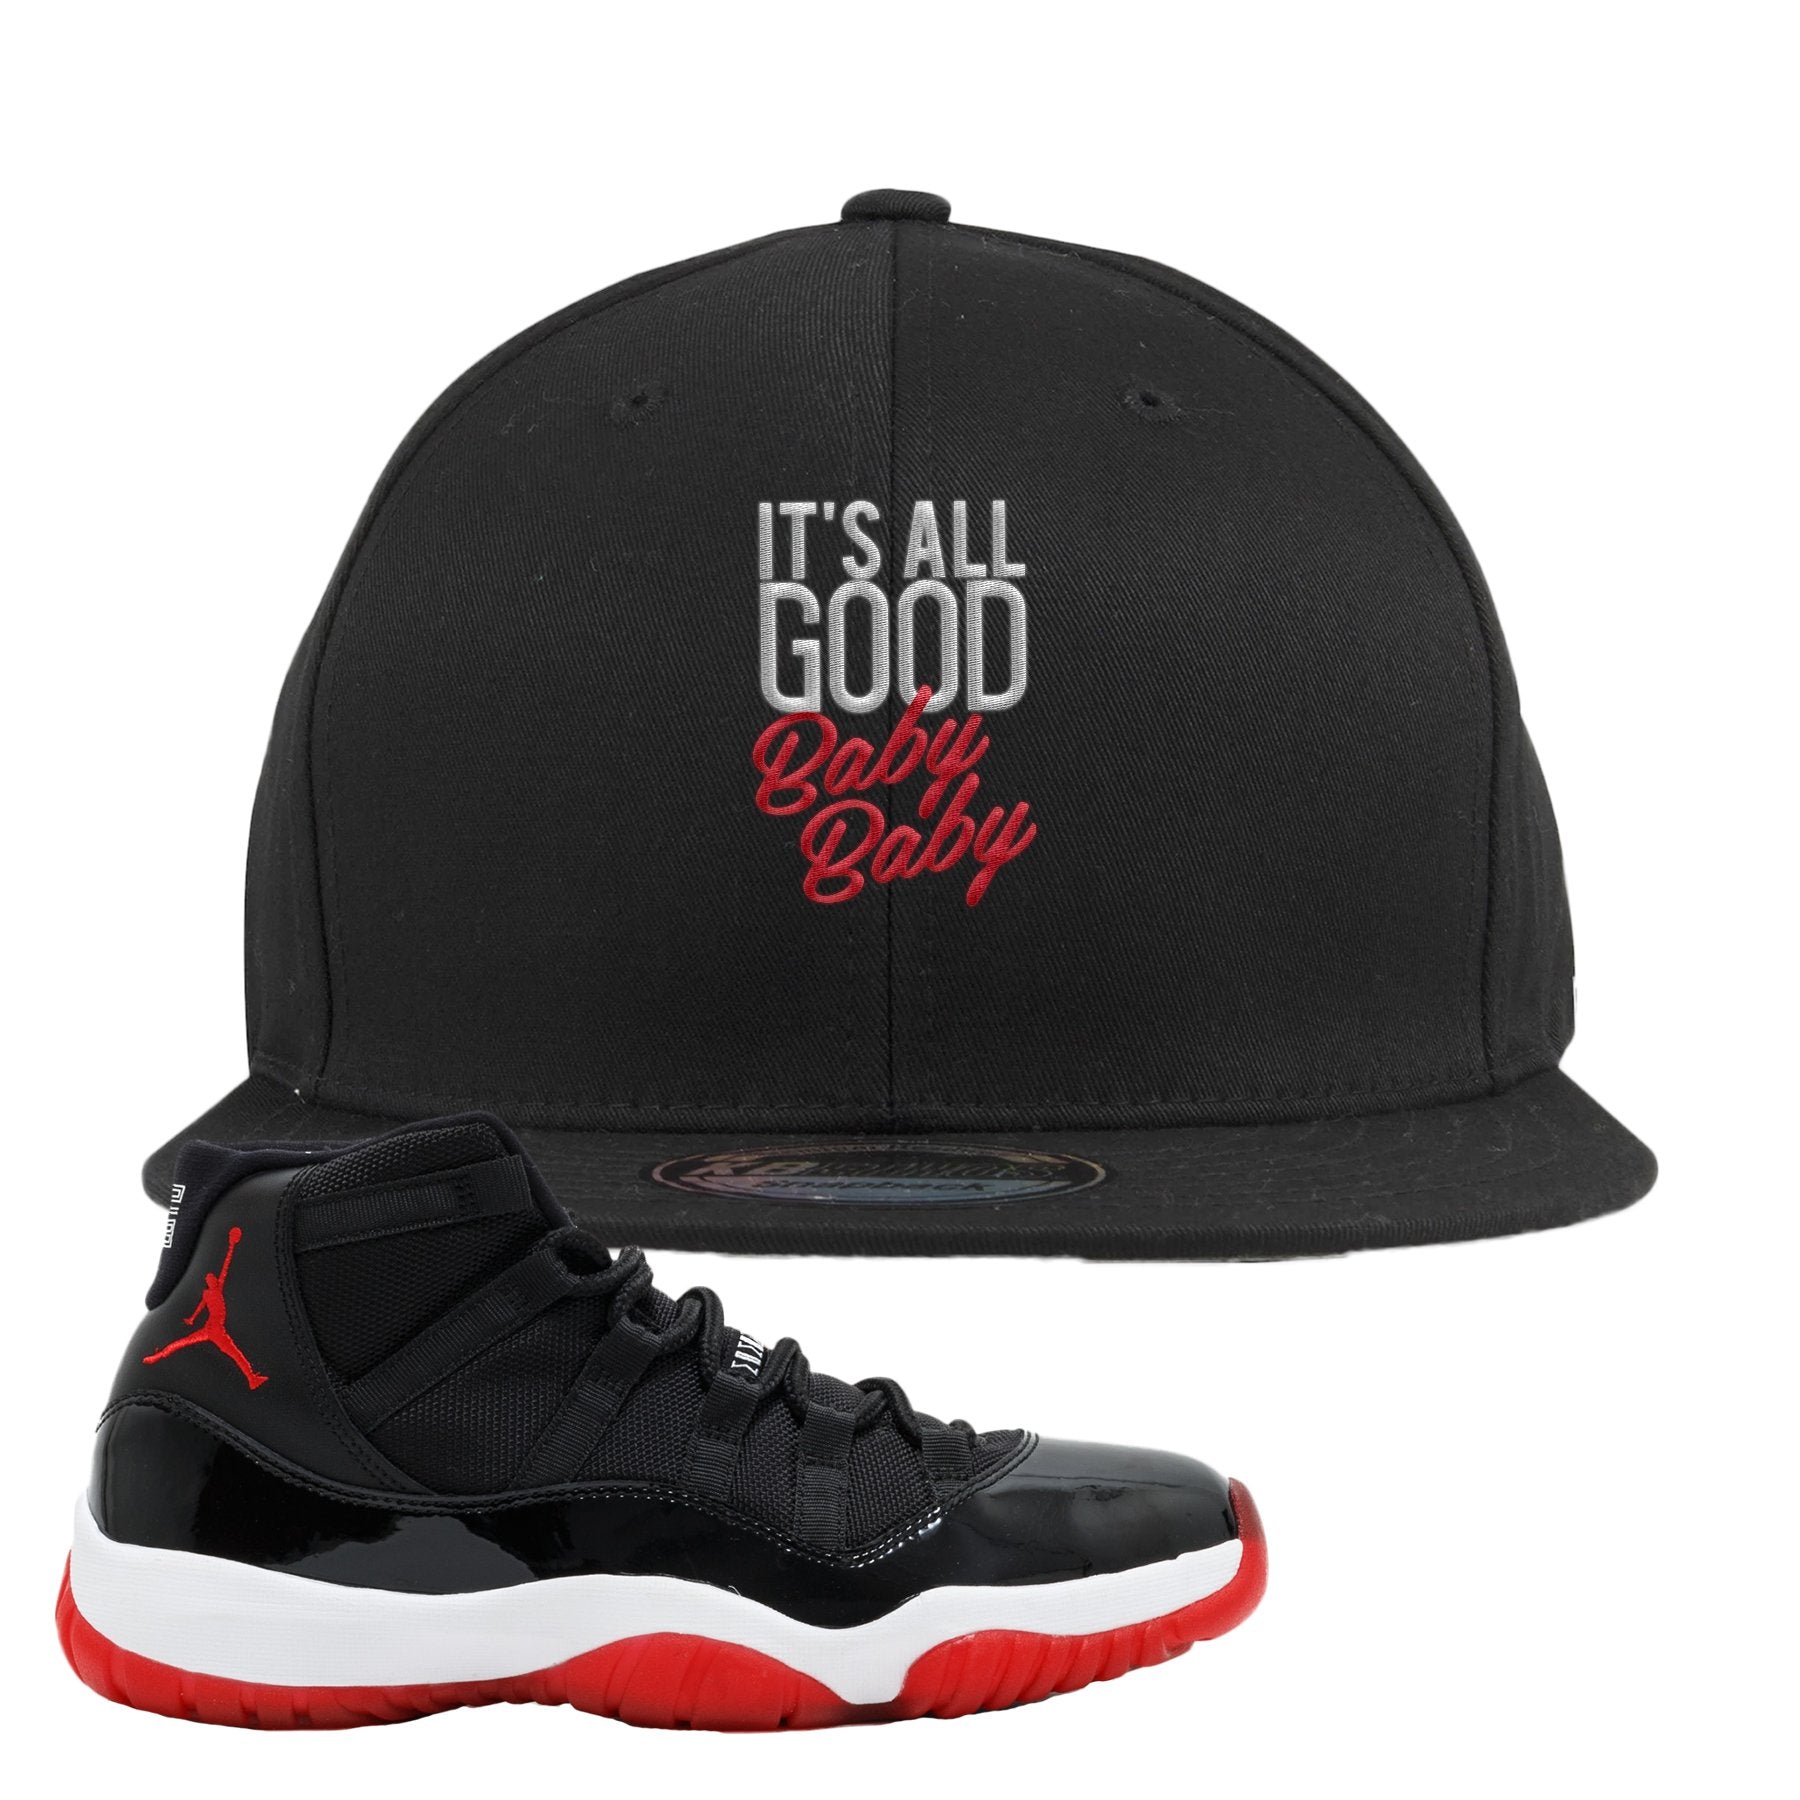 Jordan 11 Bred It's All Good Baby Baby Black Sneaker Hook Up Snapback Hat